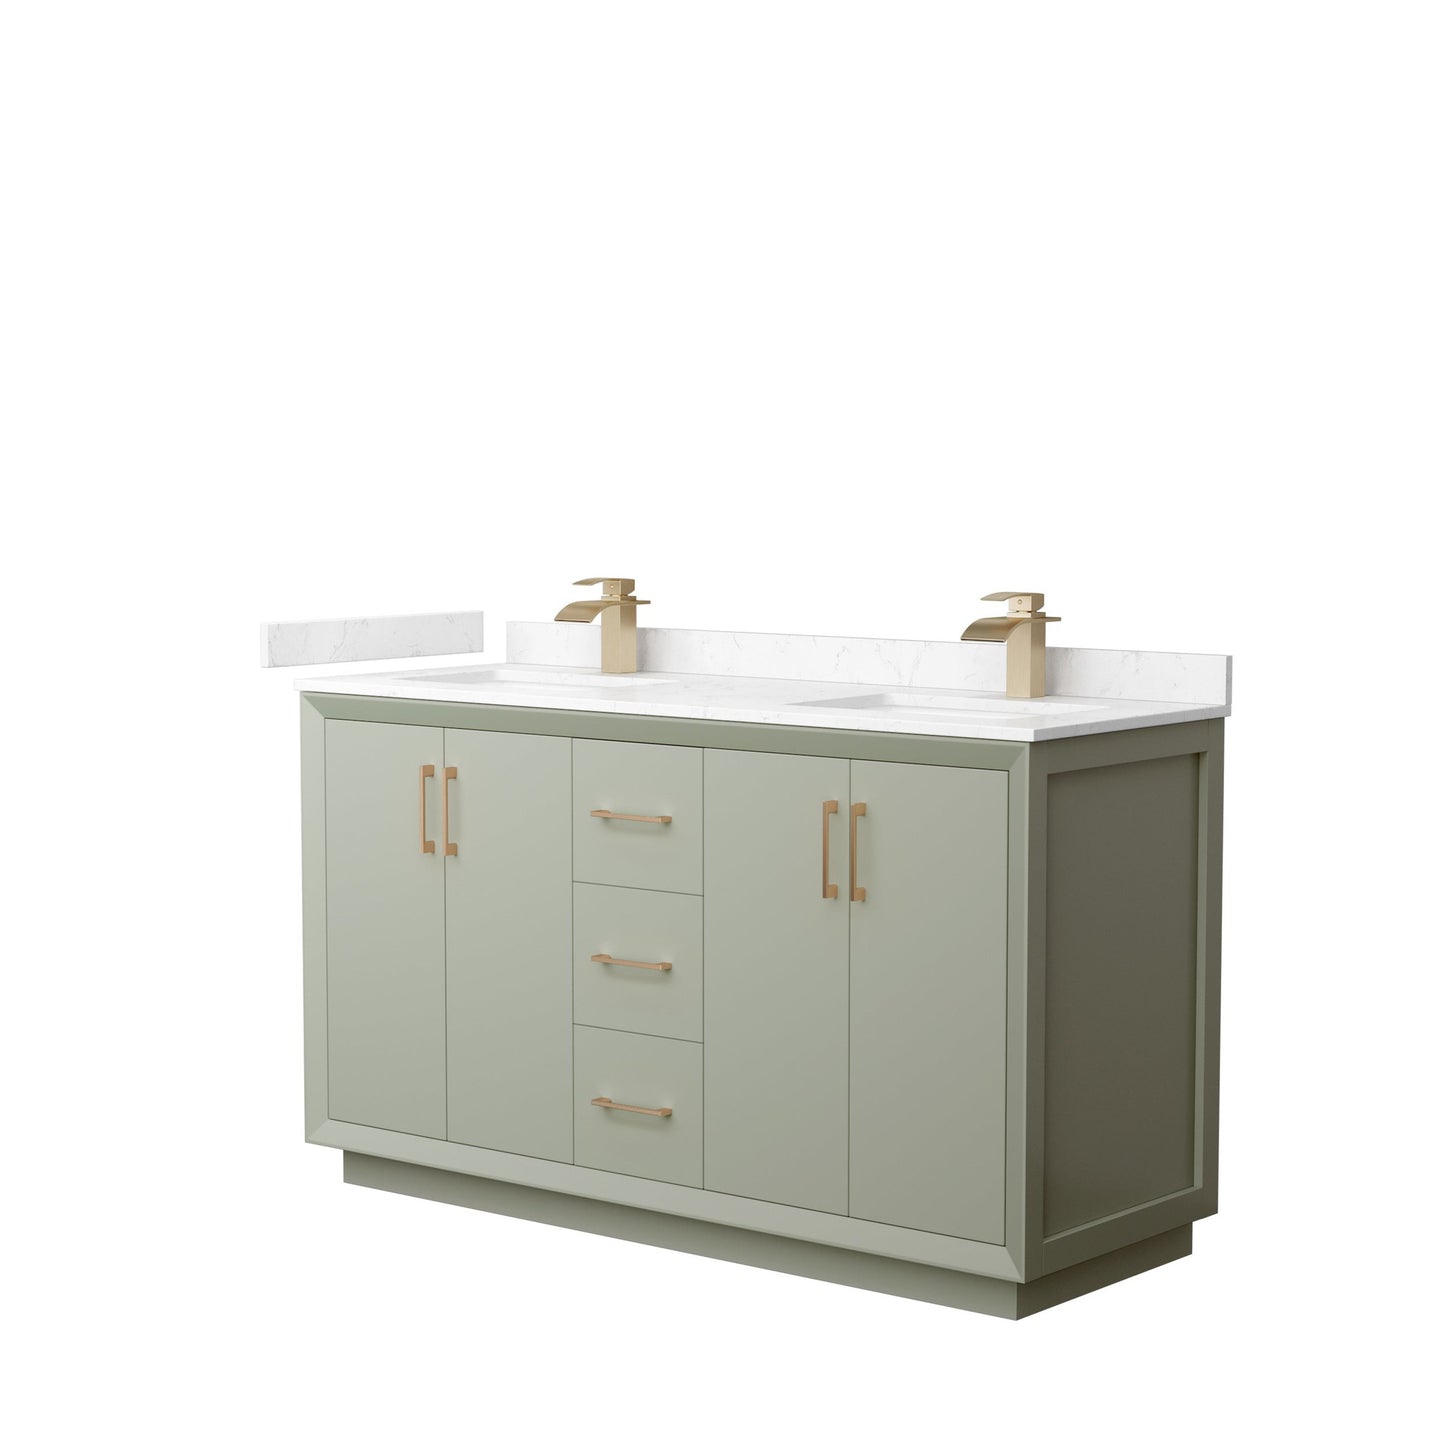 Wyndham Collection Strada 60" Double Bathroom Vanity in Light Green, Carrara Cultured Marble Countertop, Undermount Square Sinks, Satin Bronze Trim